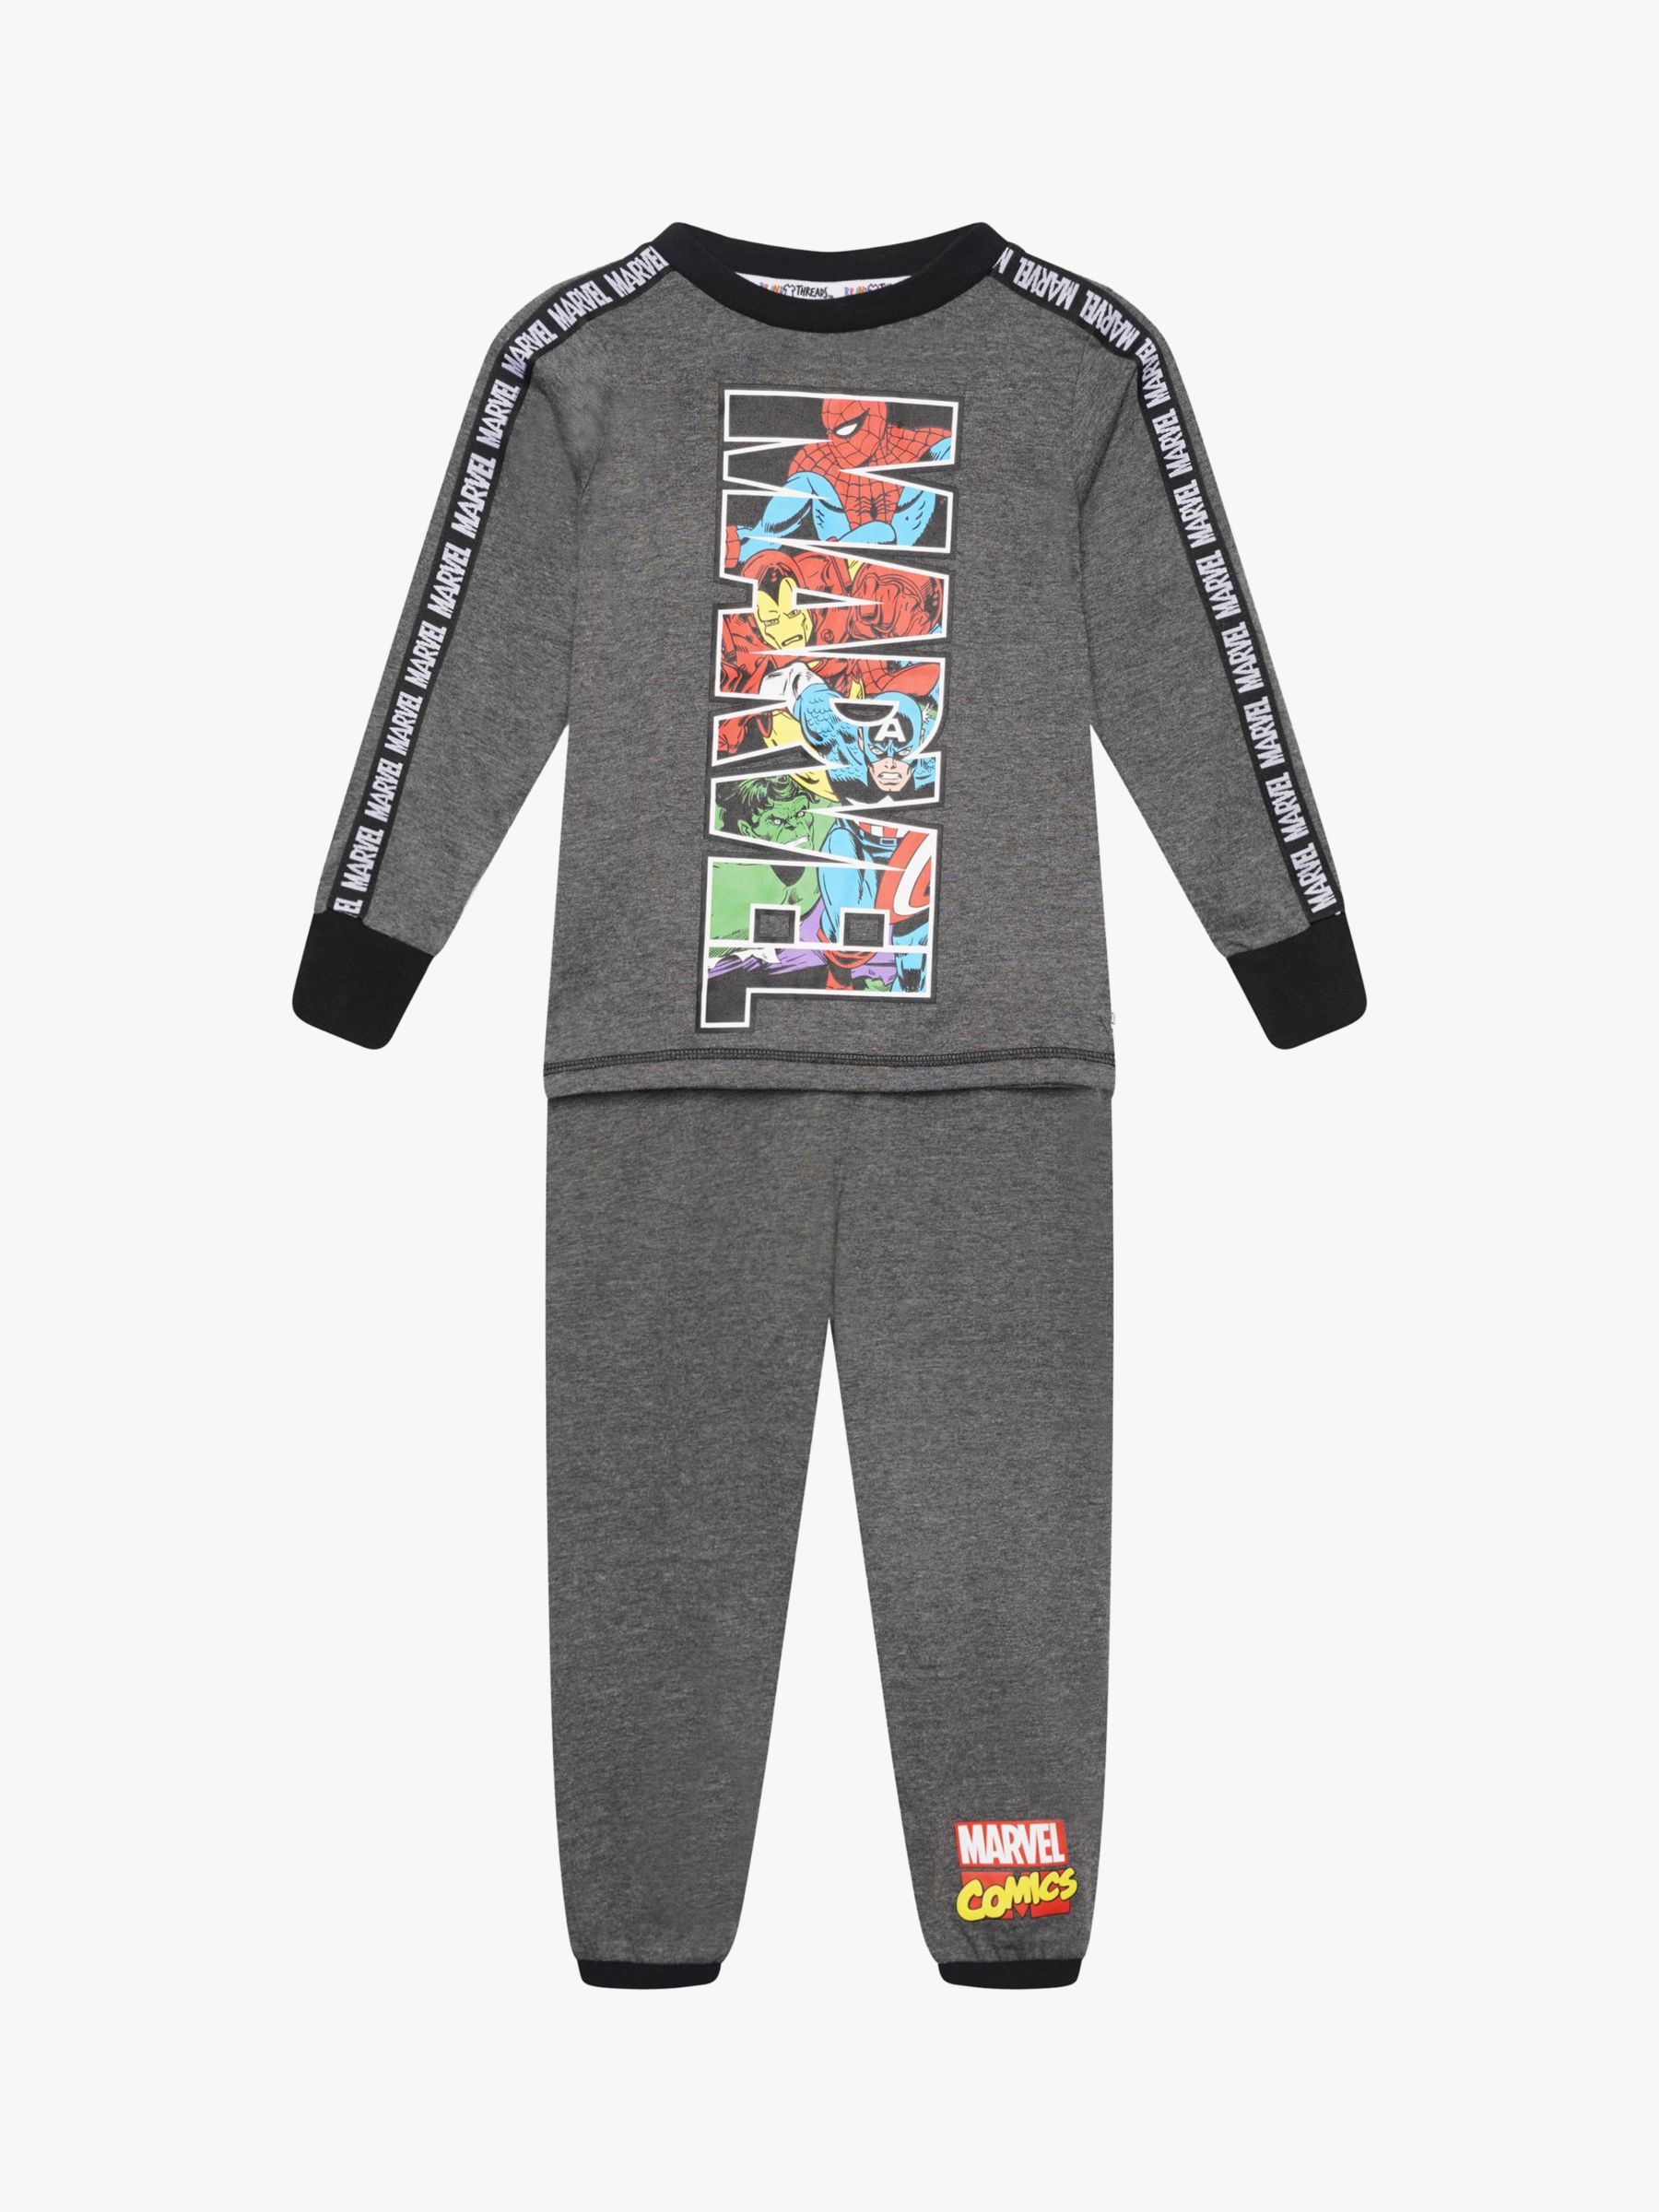 Buy Brand Threads Kids' Marvel Pyjama Set, Grey Online at johnlewis.com